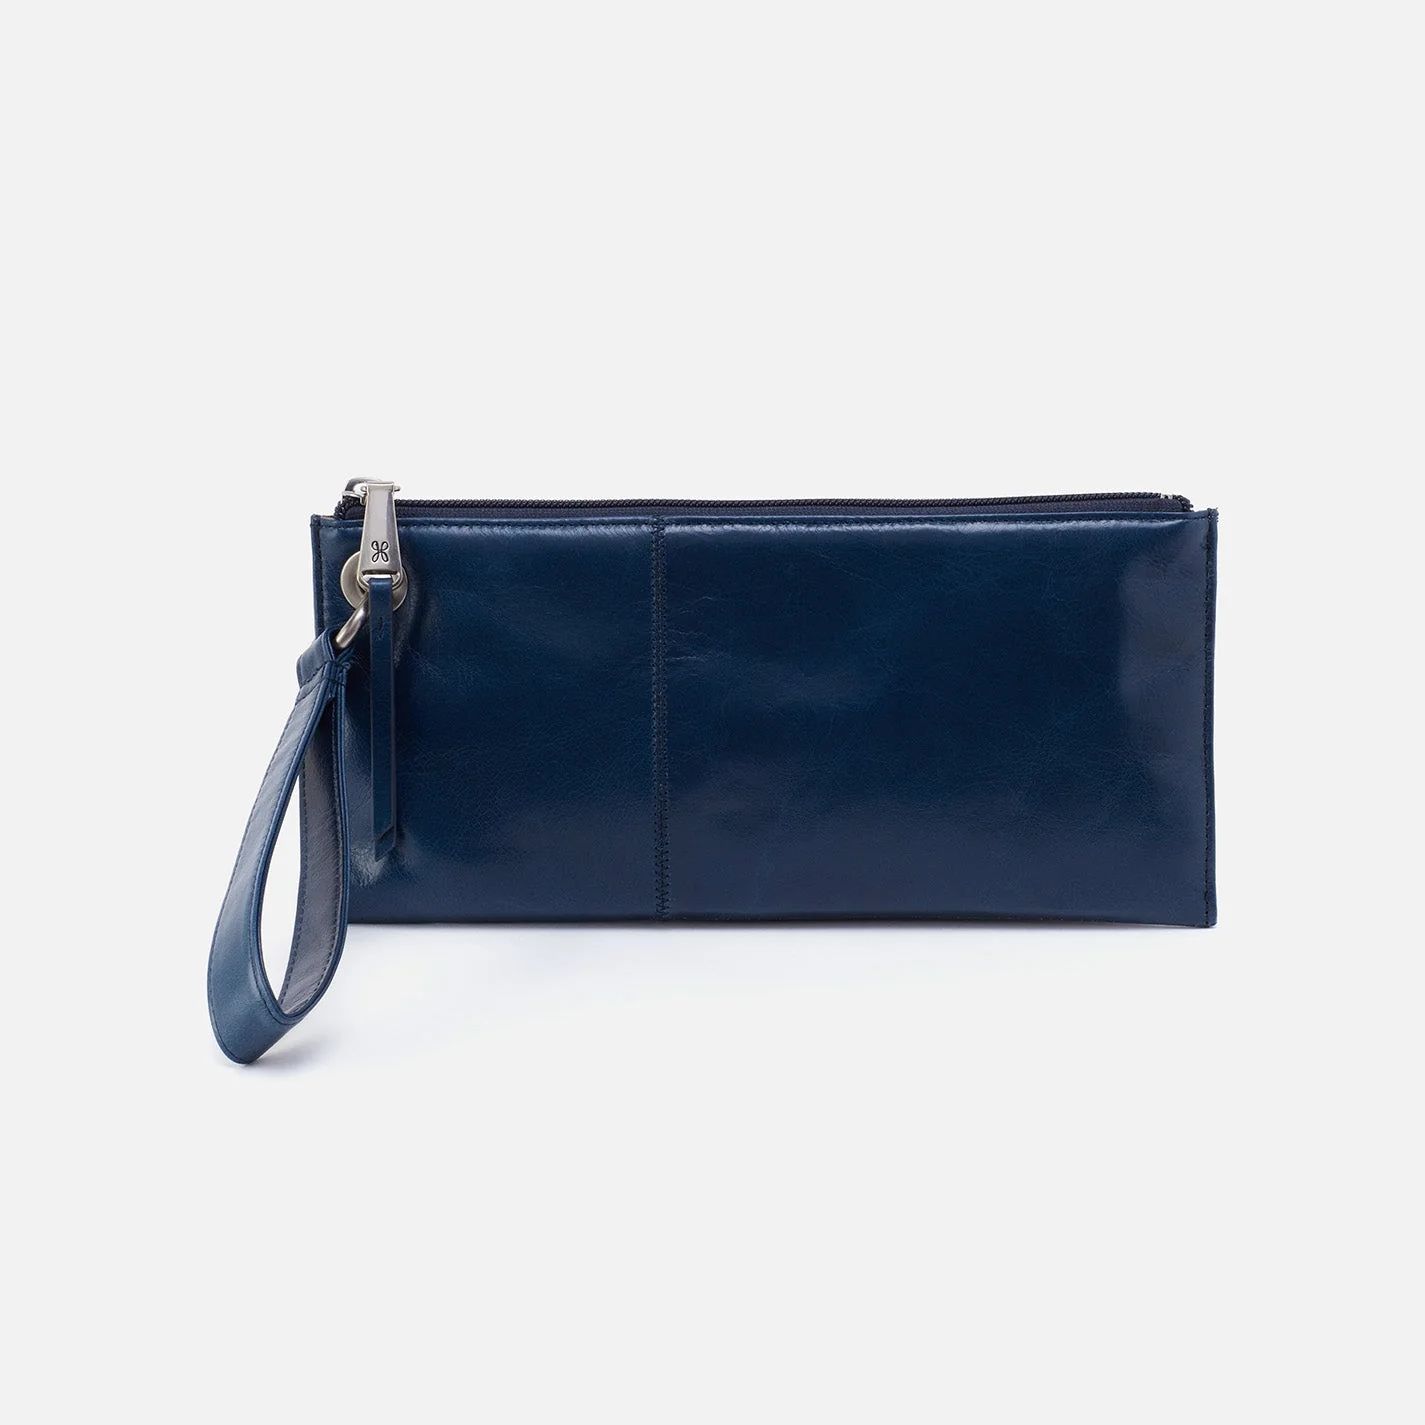 Vida Wristlet in Polished Leather - Denim | HOBO Bags